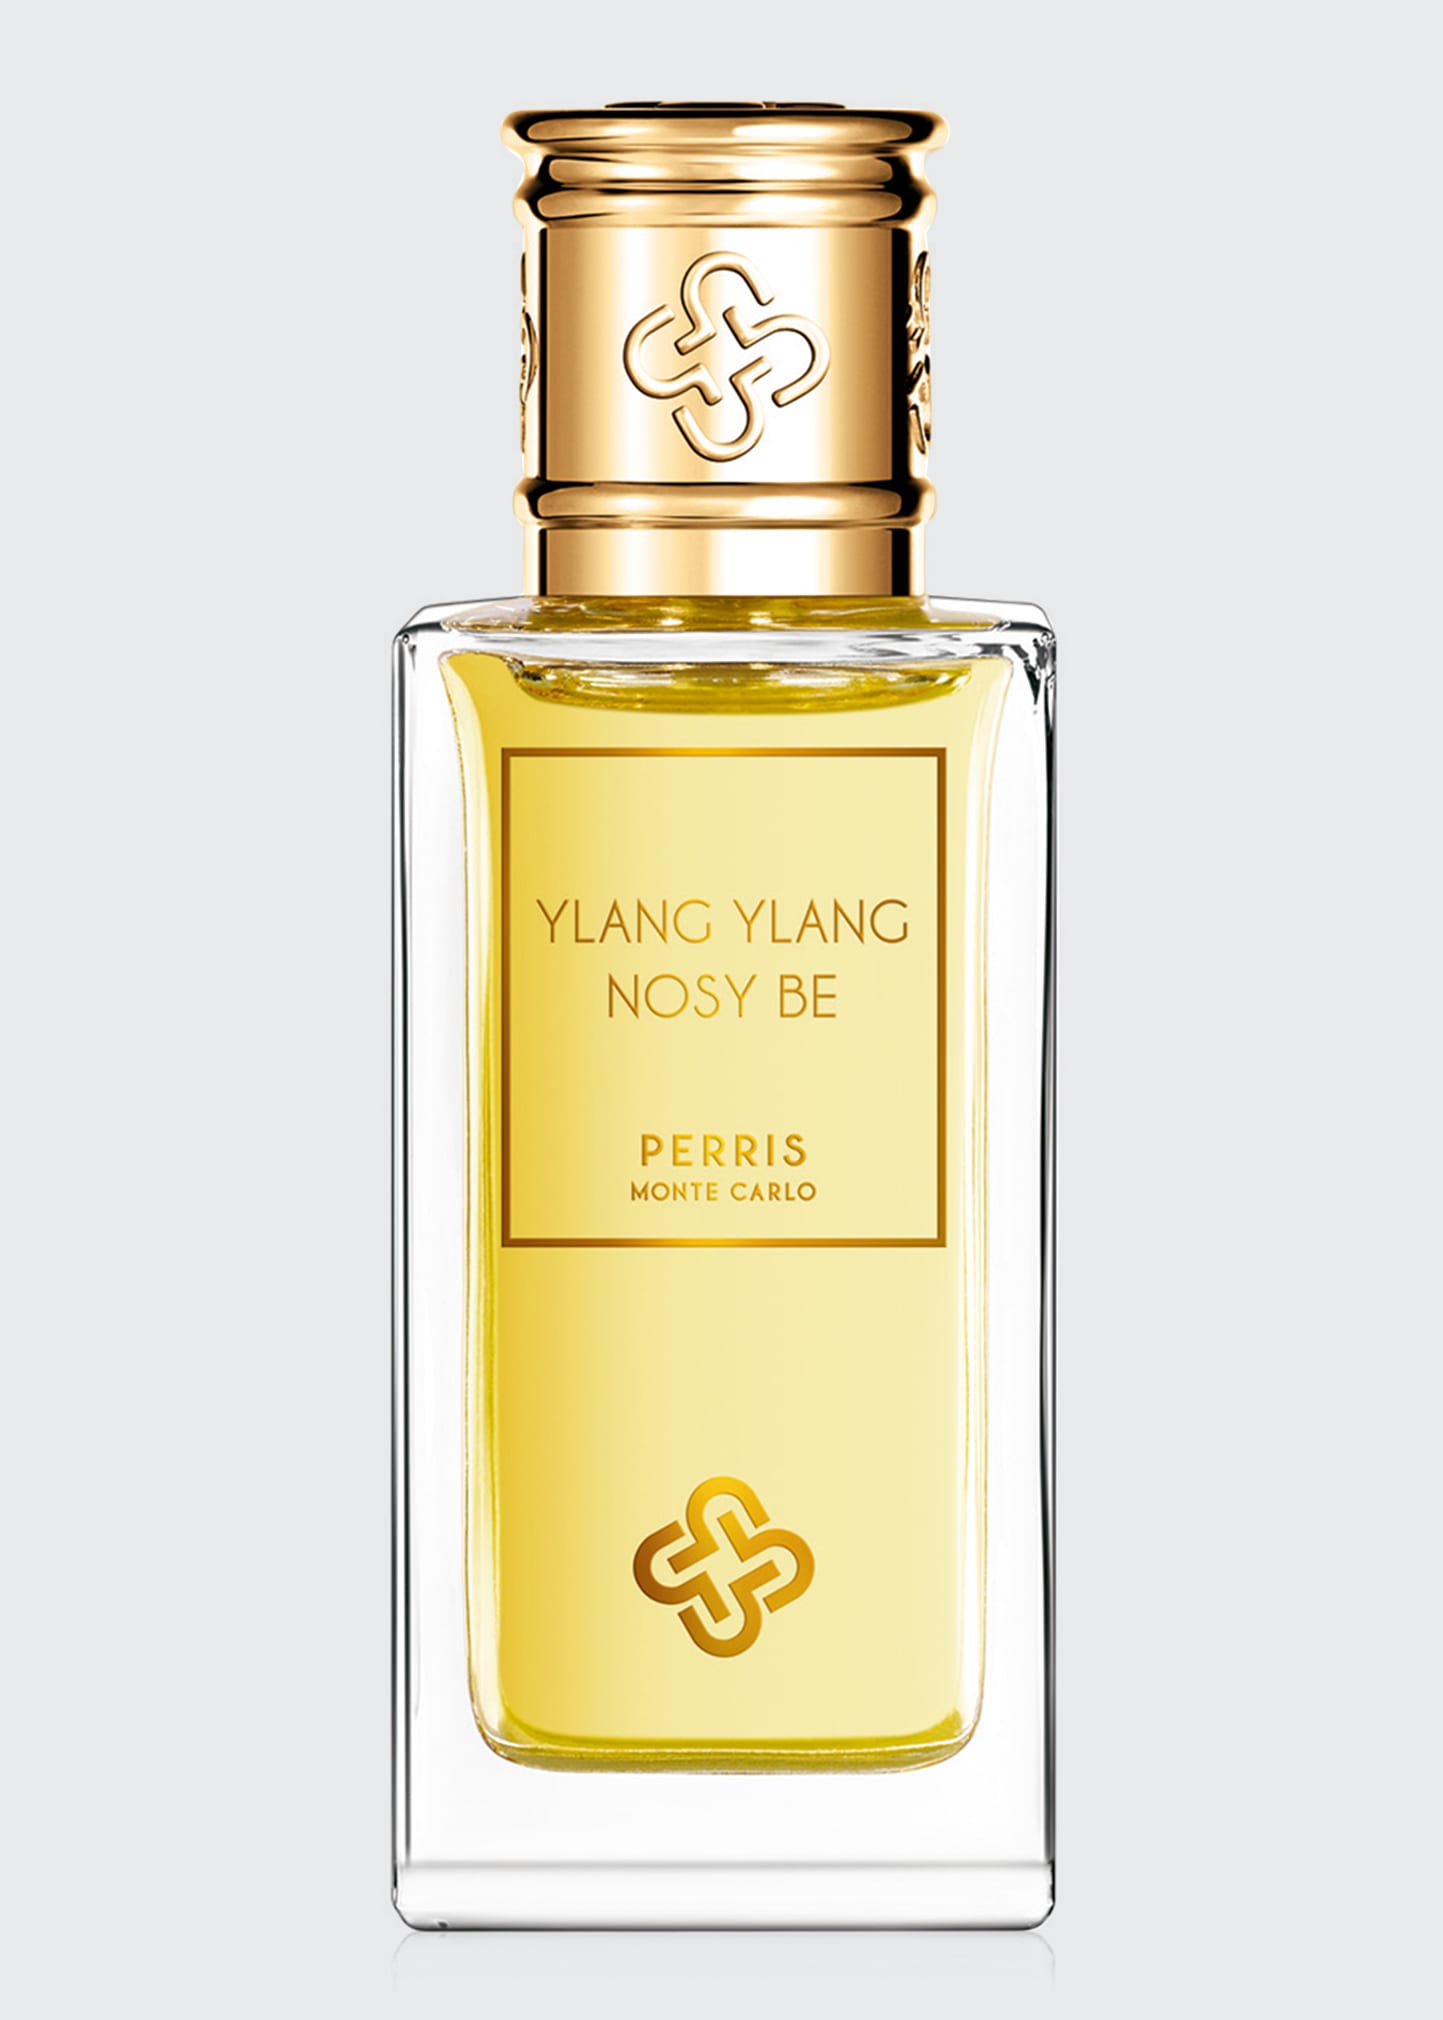 Perris Monte Carlo Ylang Ylang Nosy Be Perfume, 1.7 oz. / 50 mL